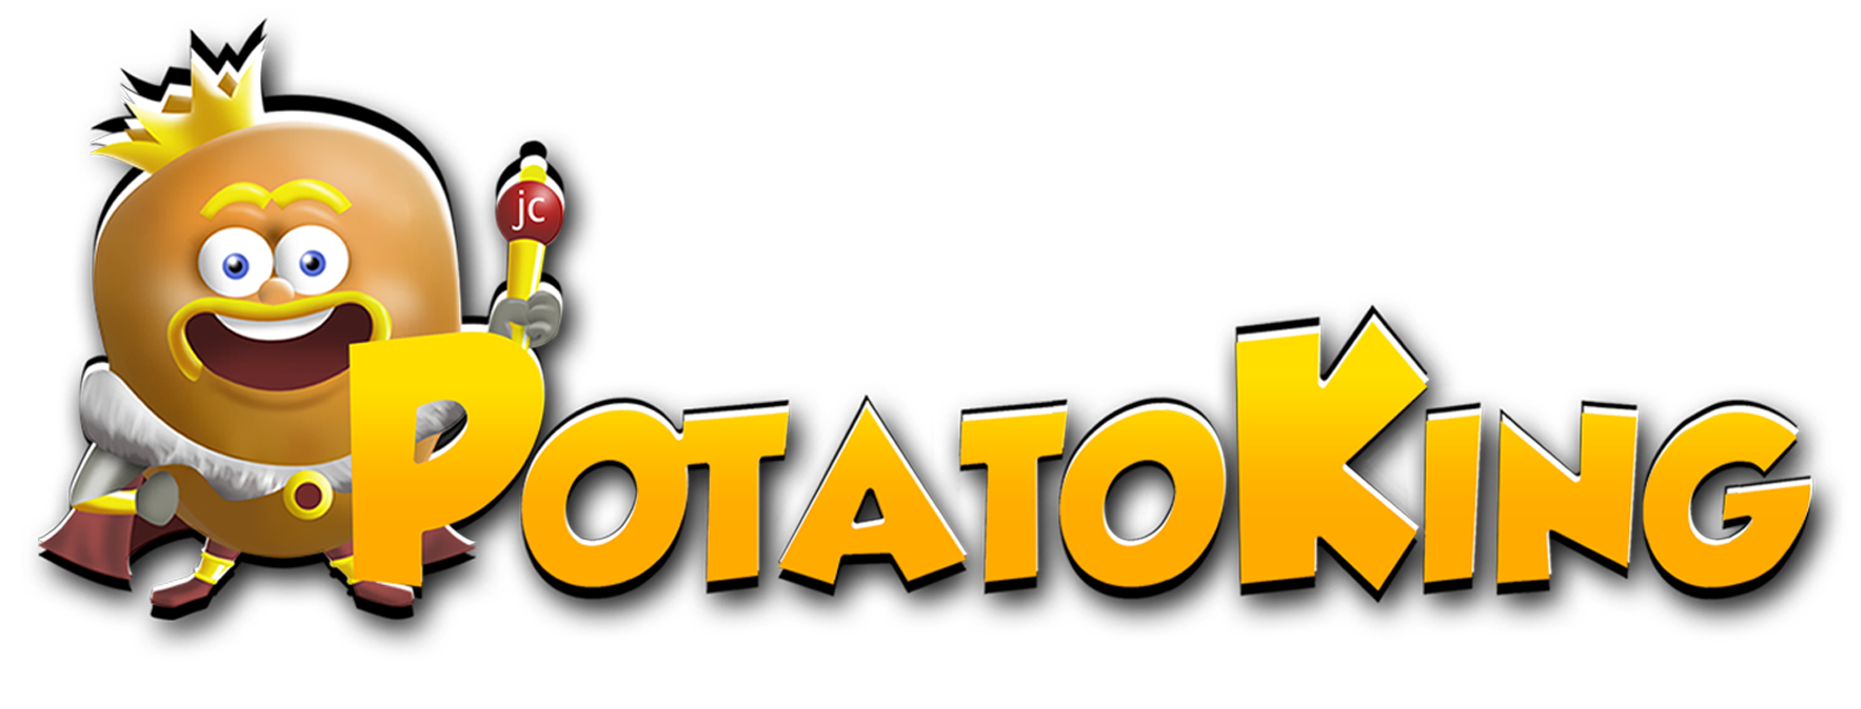 Potato King Logo